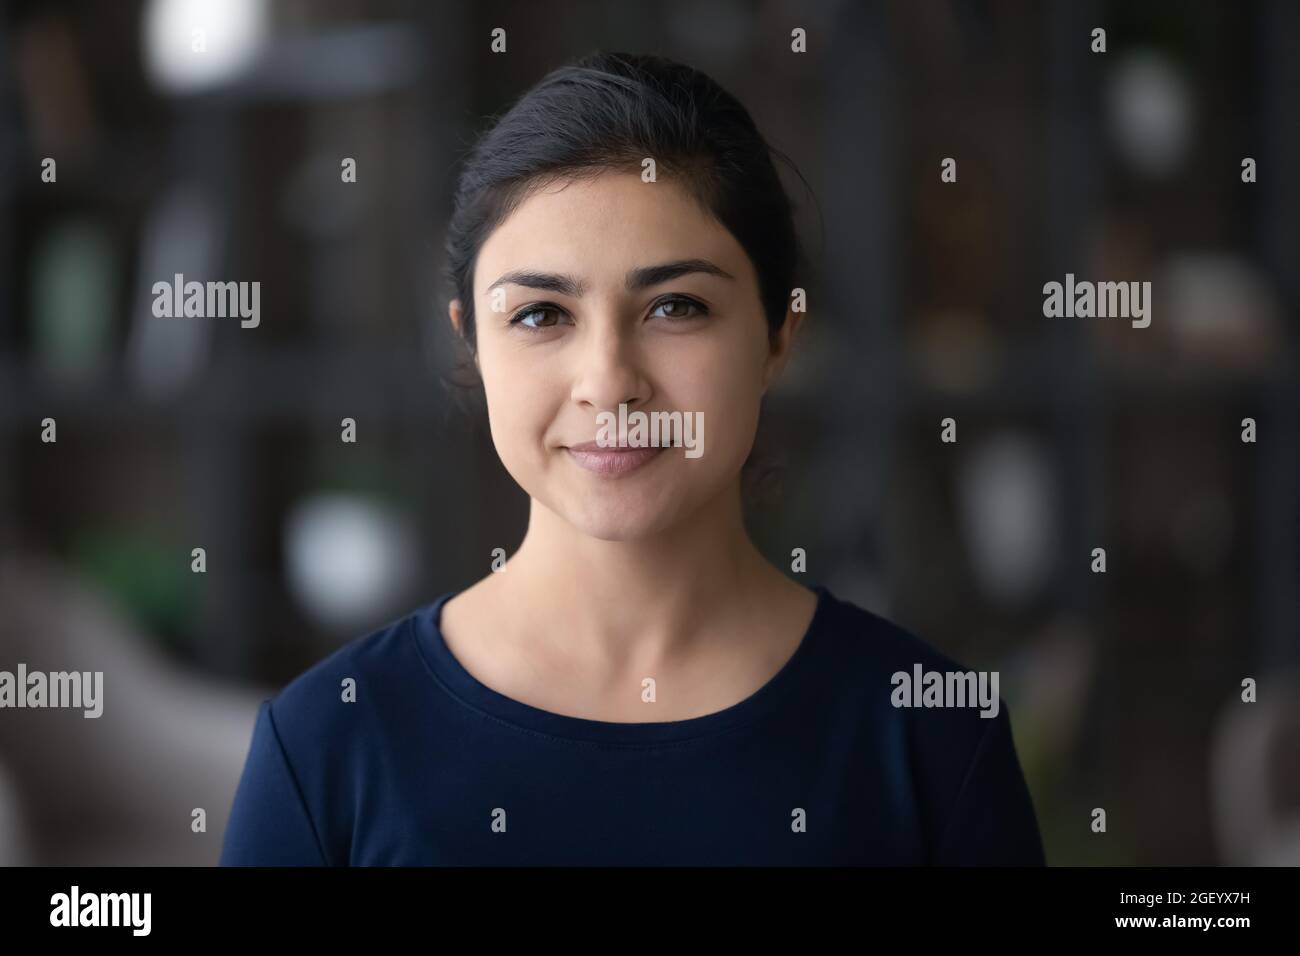 Headshot portrait of smiling Indian woman renter Stock Photo